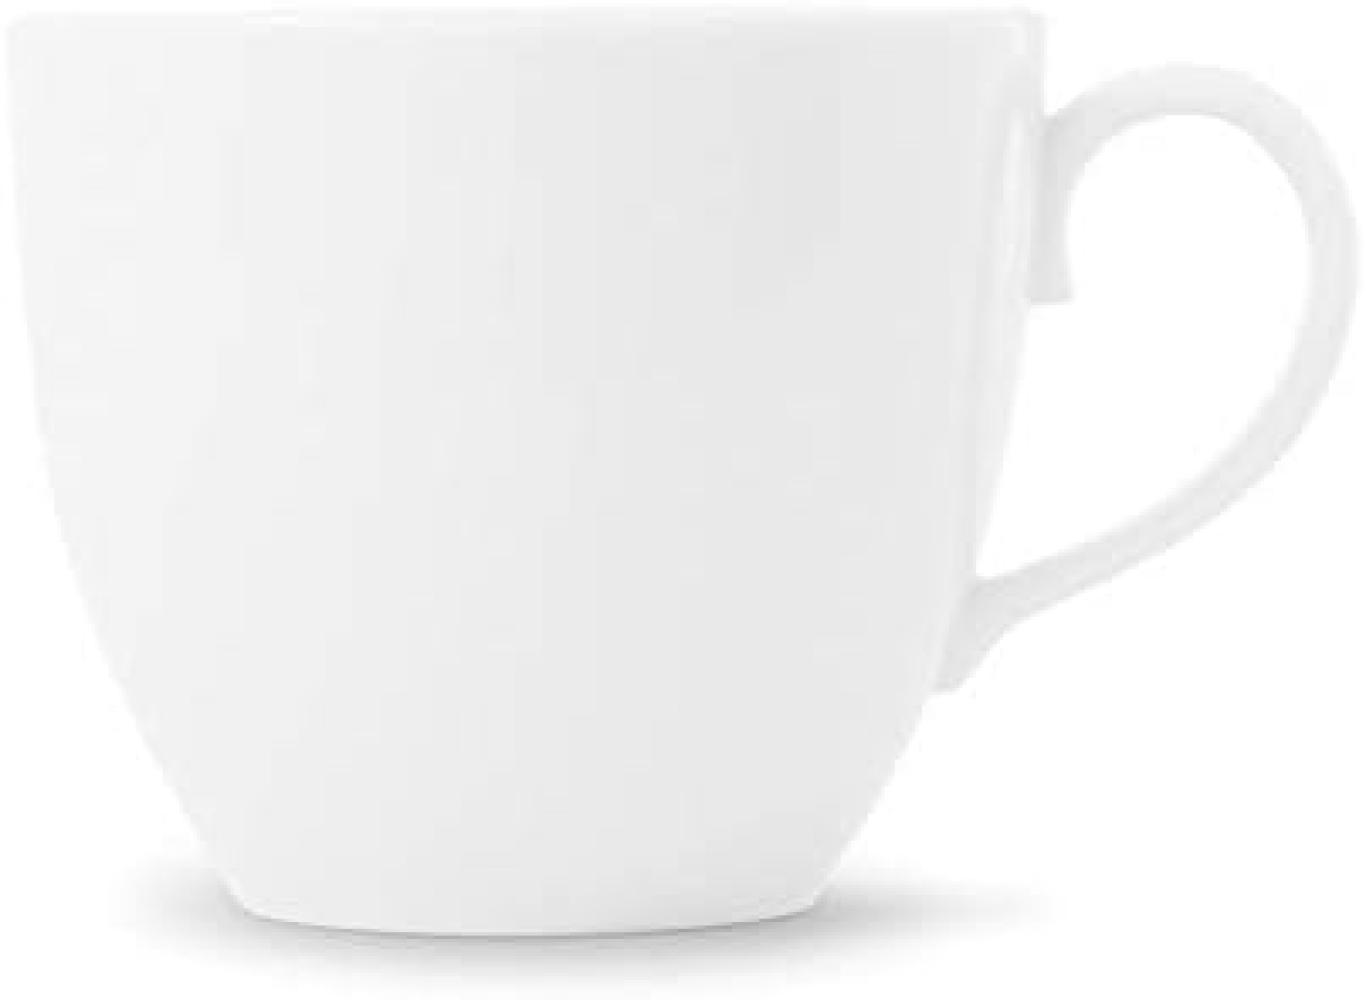 Obertasse 0,17 l La Belle Weiß Friesland Porzellan Kaffeetasse - Mikrowelle geeignet, Spülmaschinenfest Bild 1